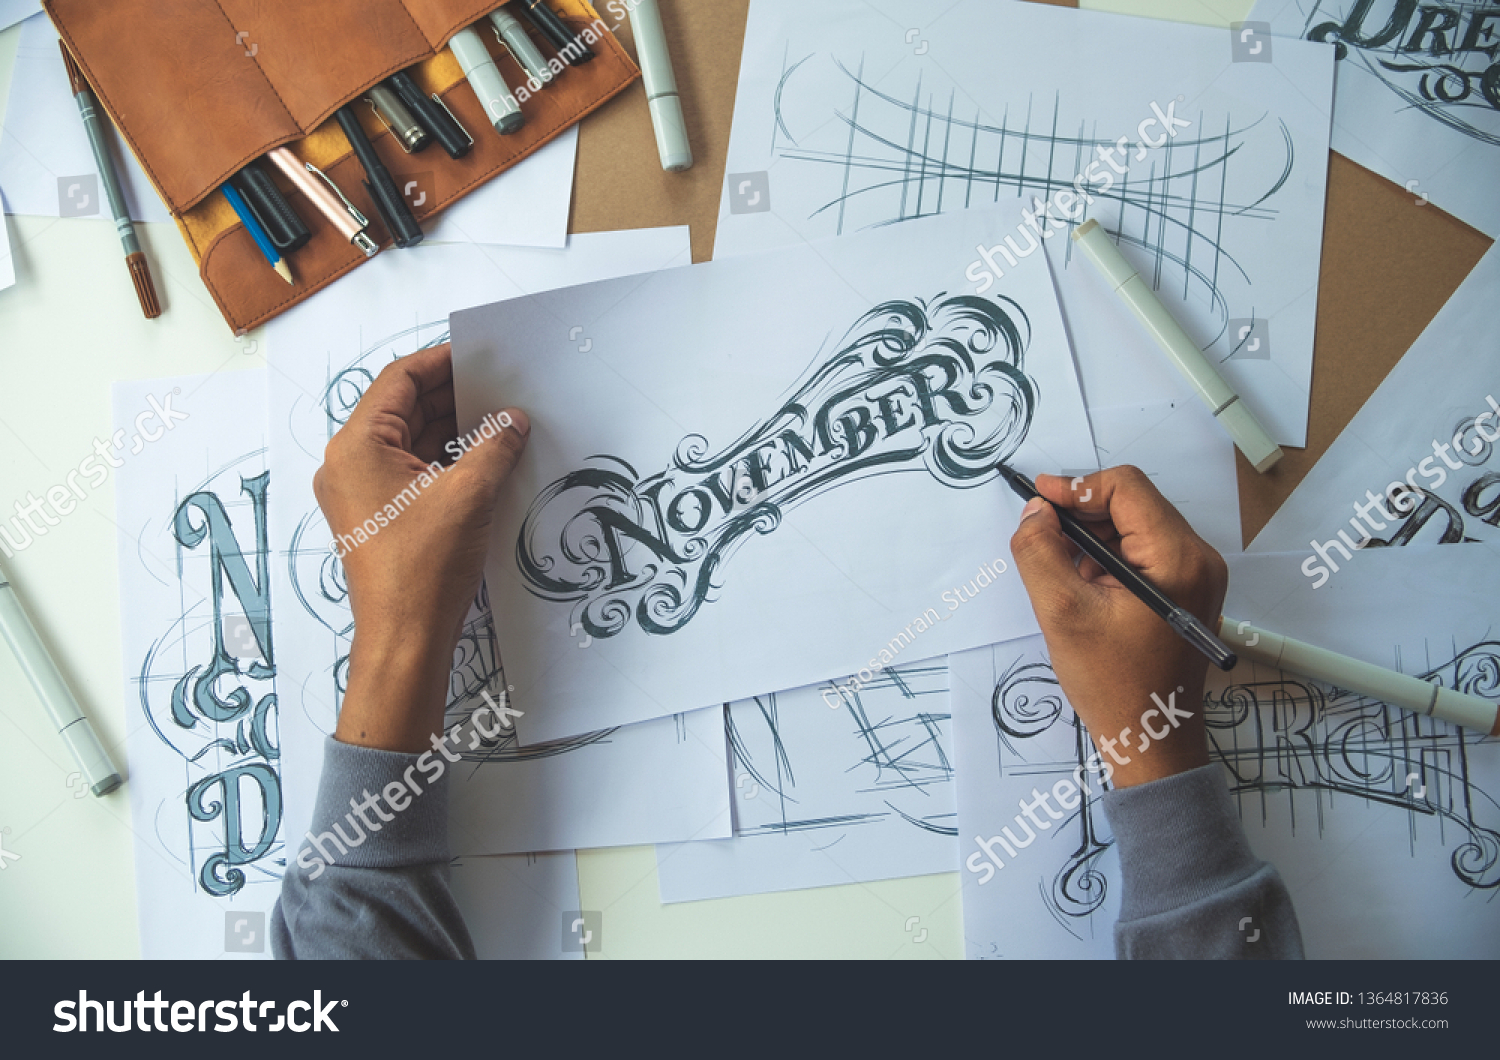 Typography Calligraphy artist designer drawing sketch writes letting spelled pen brush ink paper table artwork.Workplace design studio. #1364817836